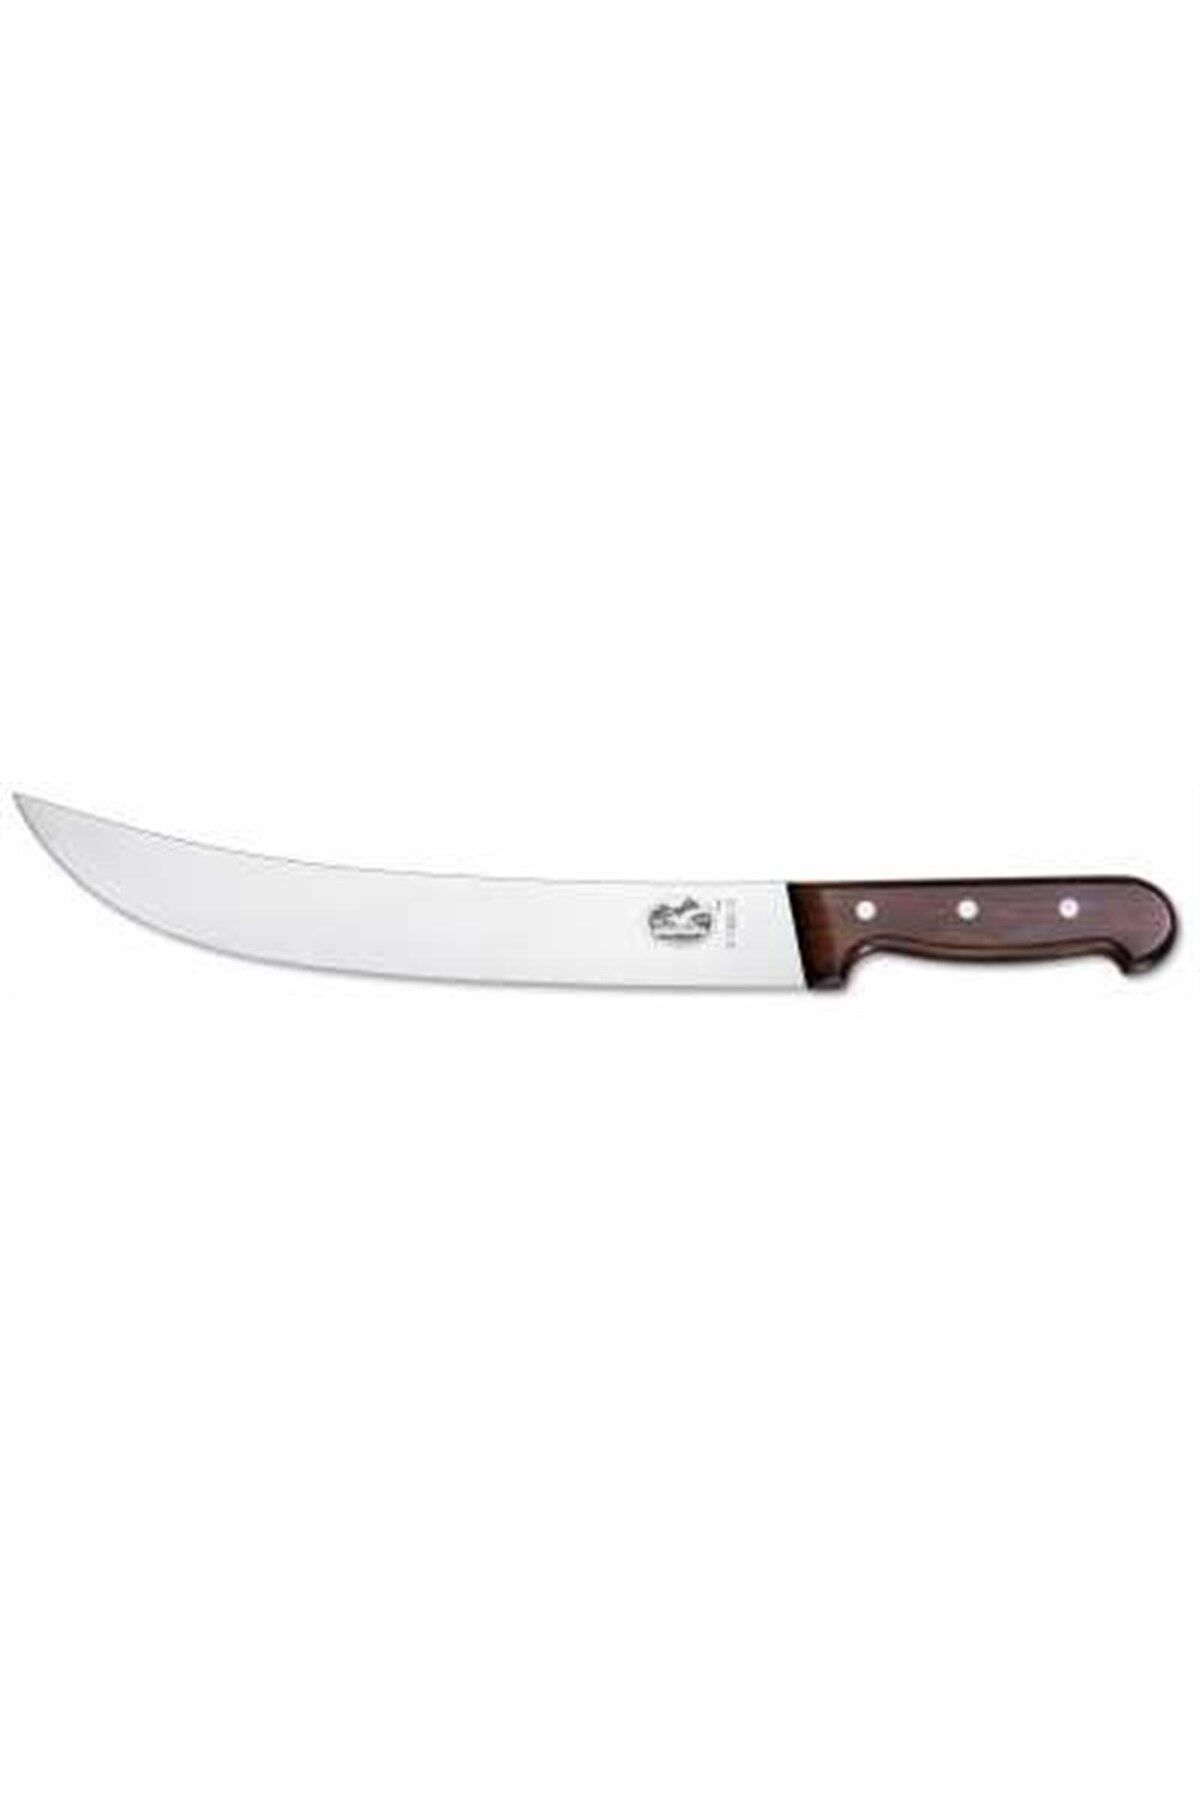 VICTORINOX 5.7300.31 31cm Kavisli Biftek Bıçağı